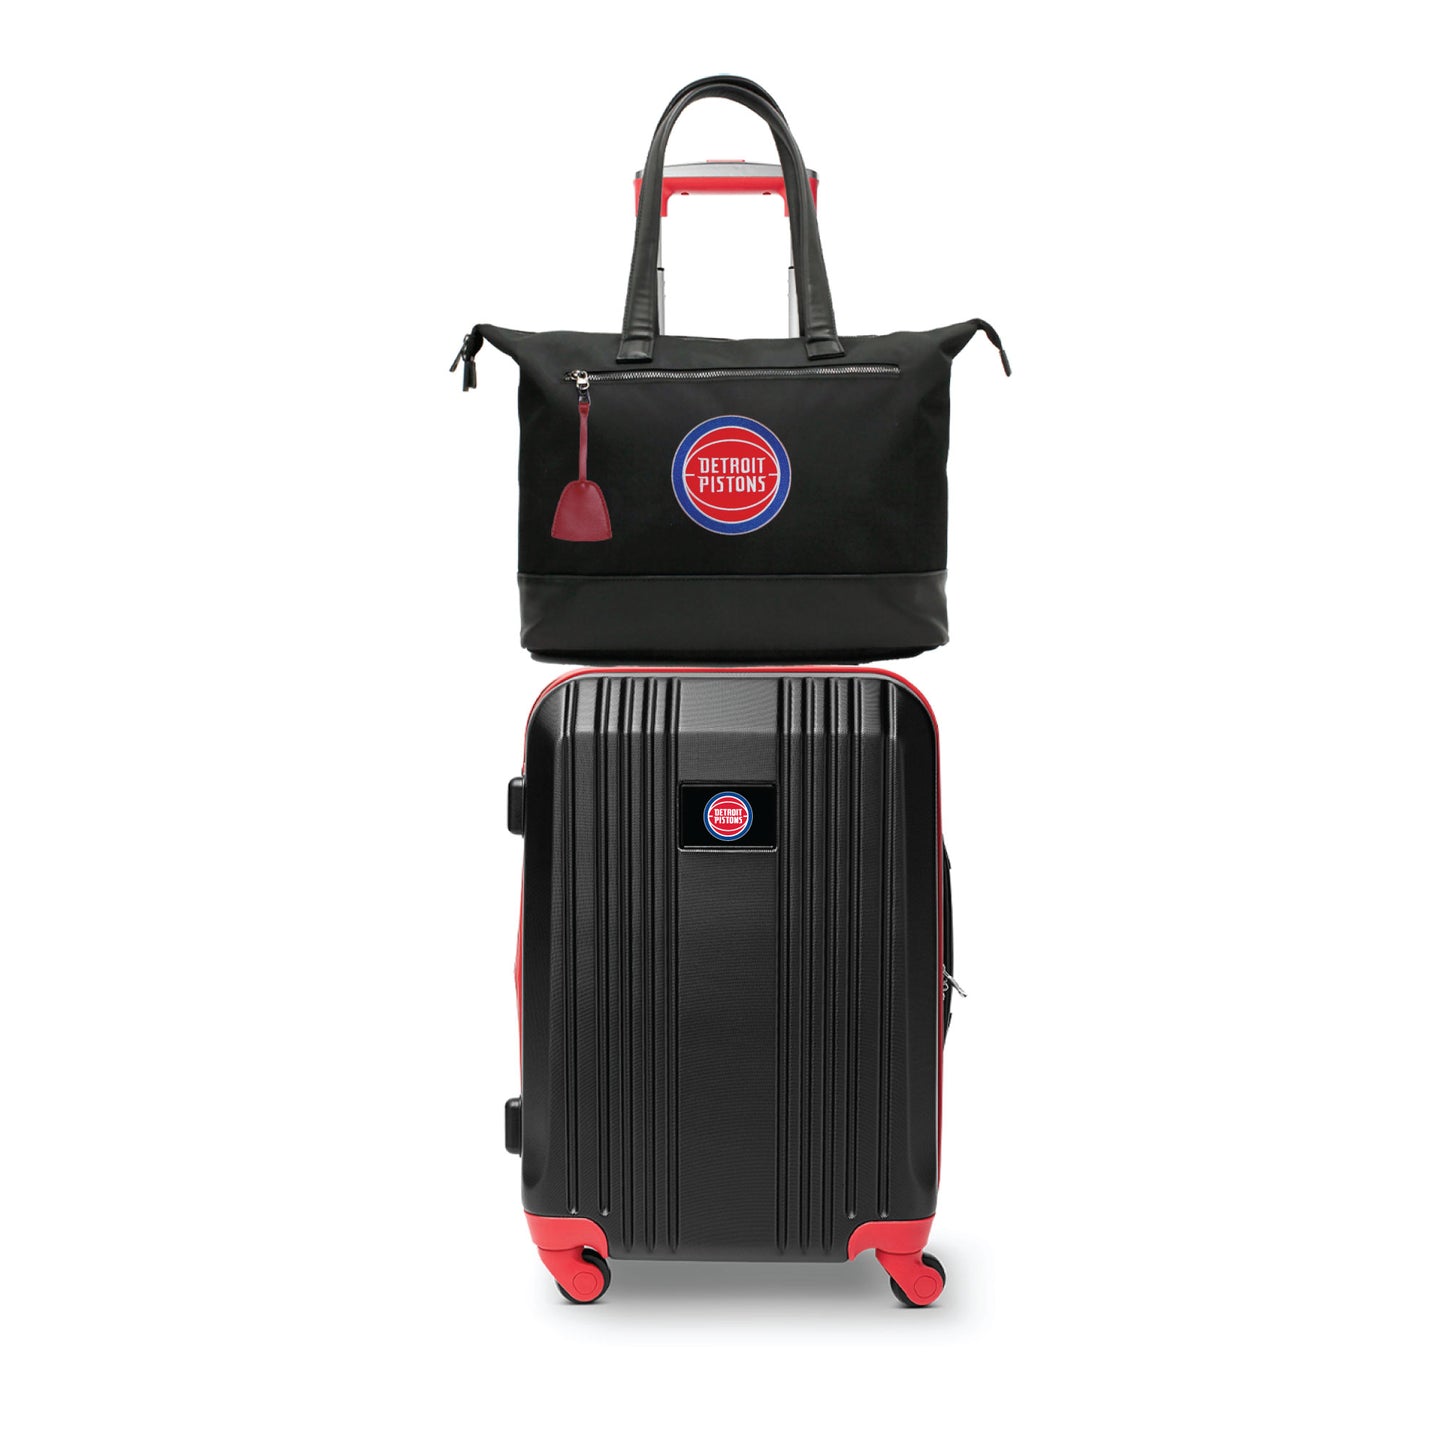 Detroit Pistons Premium Laptop Tote Bag and Luggage Set